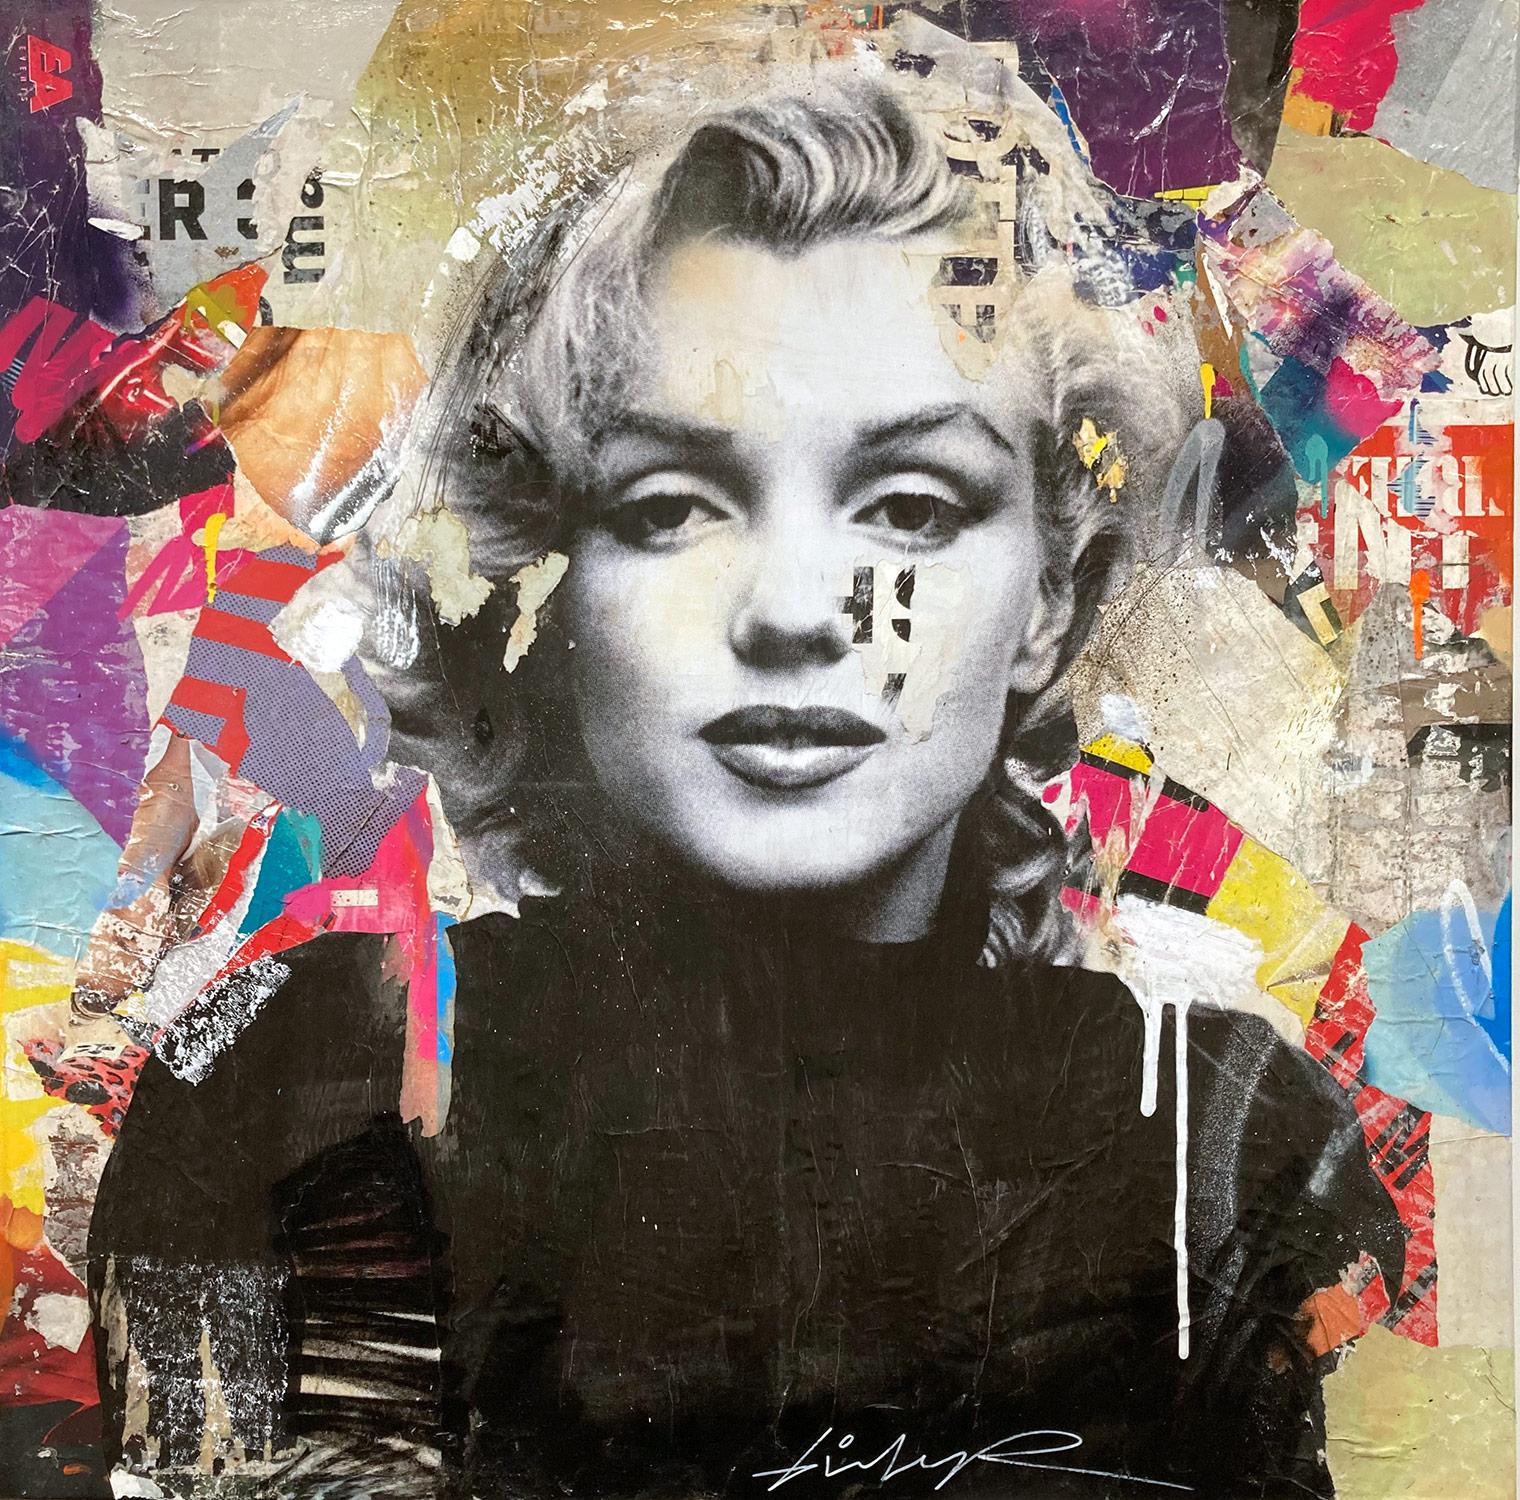 Gieler Abstract Painting - "I Defy Gravity" Marilyn Monroe Portrait Pop Art Street Art Colorful Painting